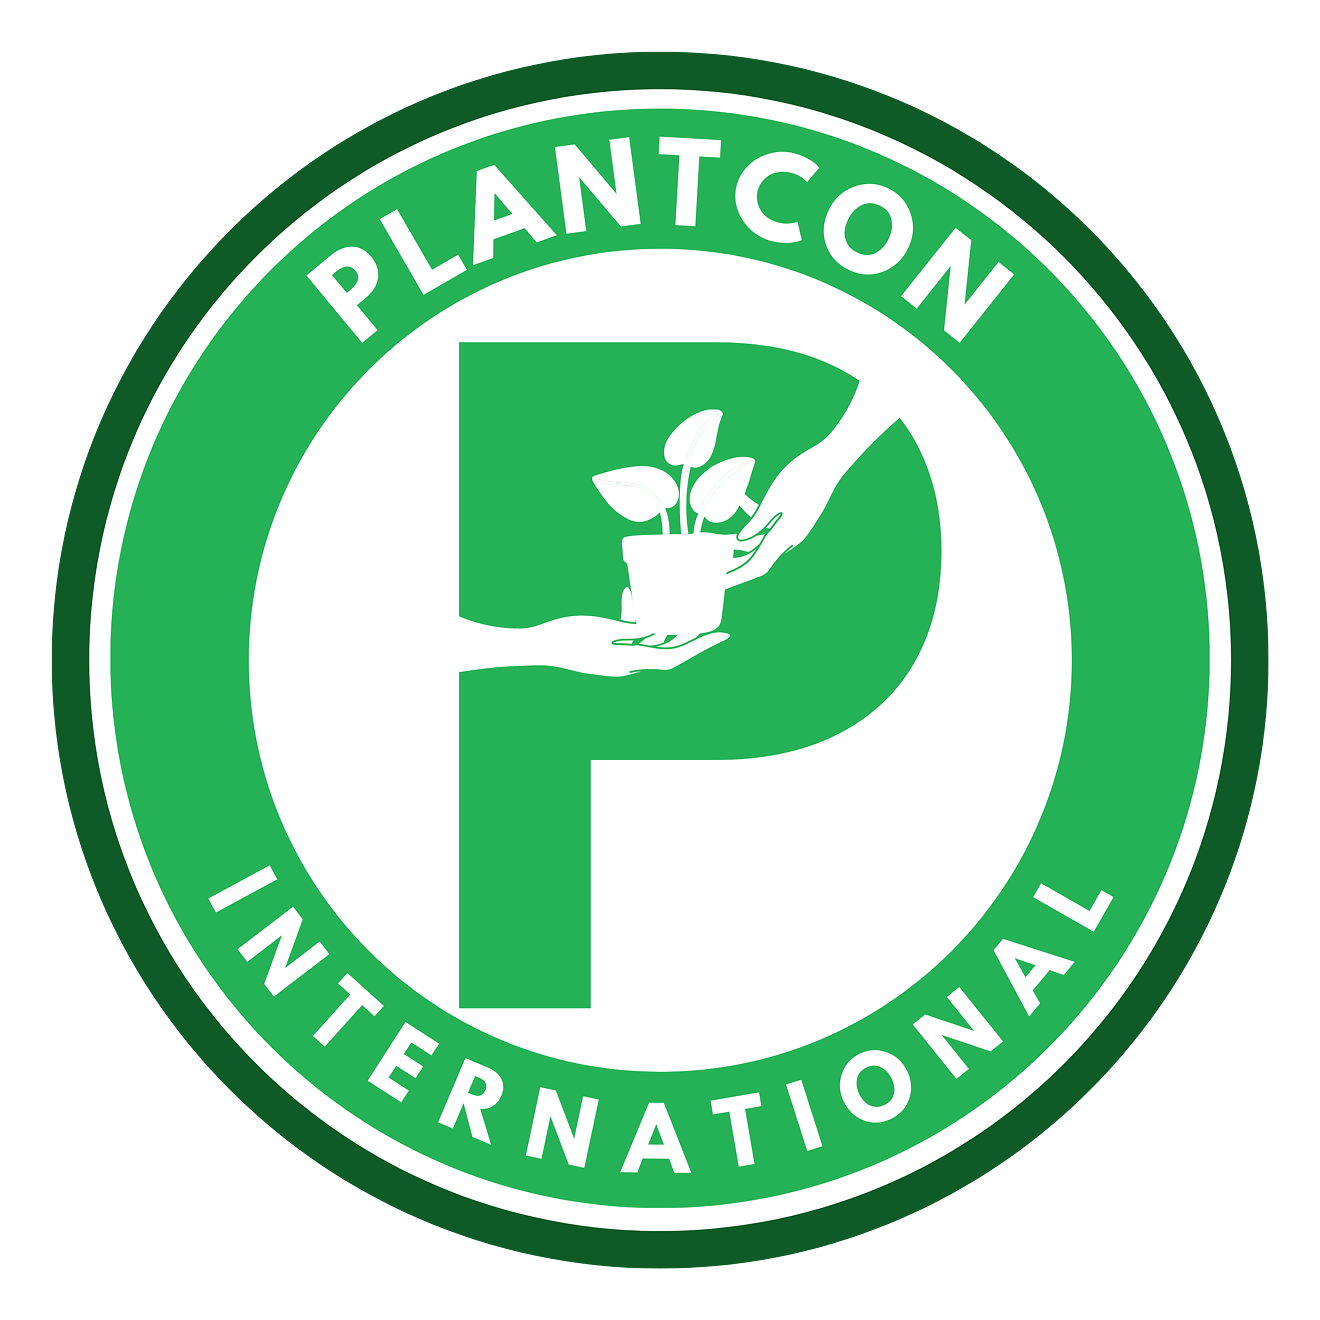 plantcon-emblem-logo.png